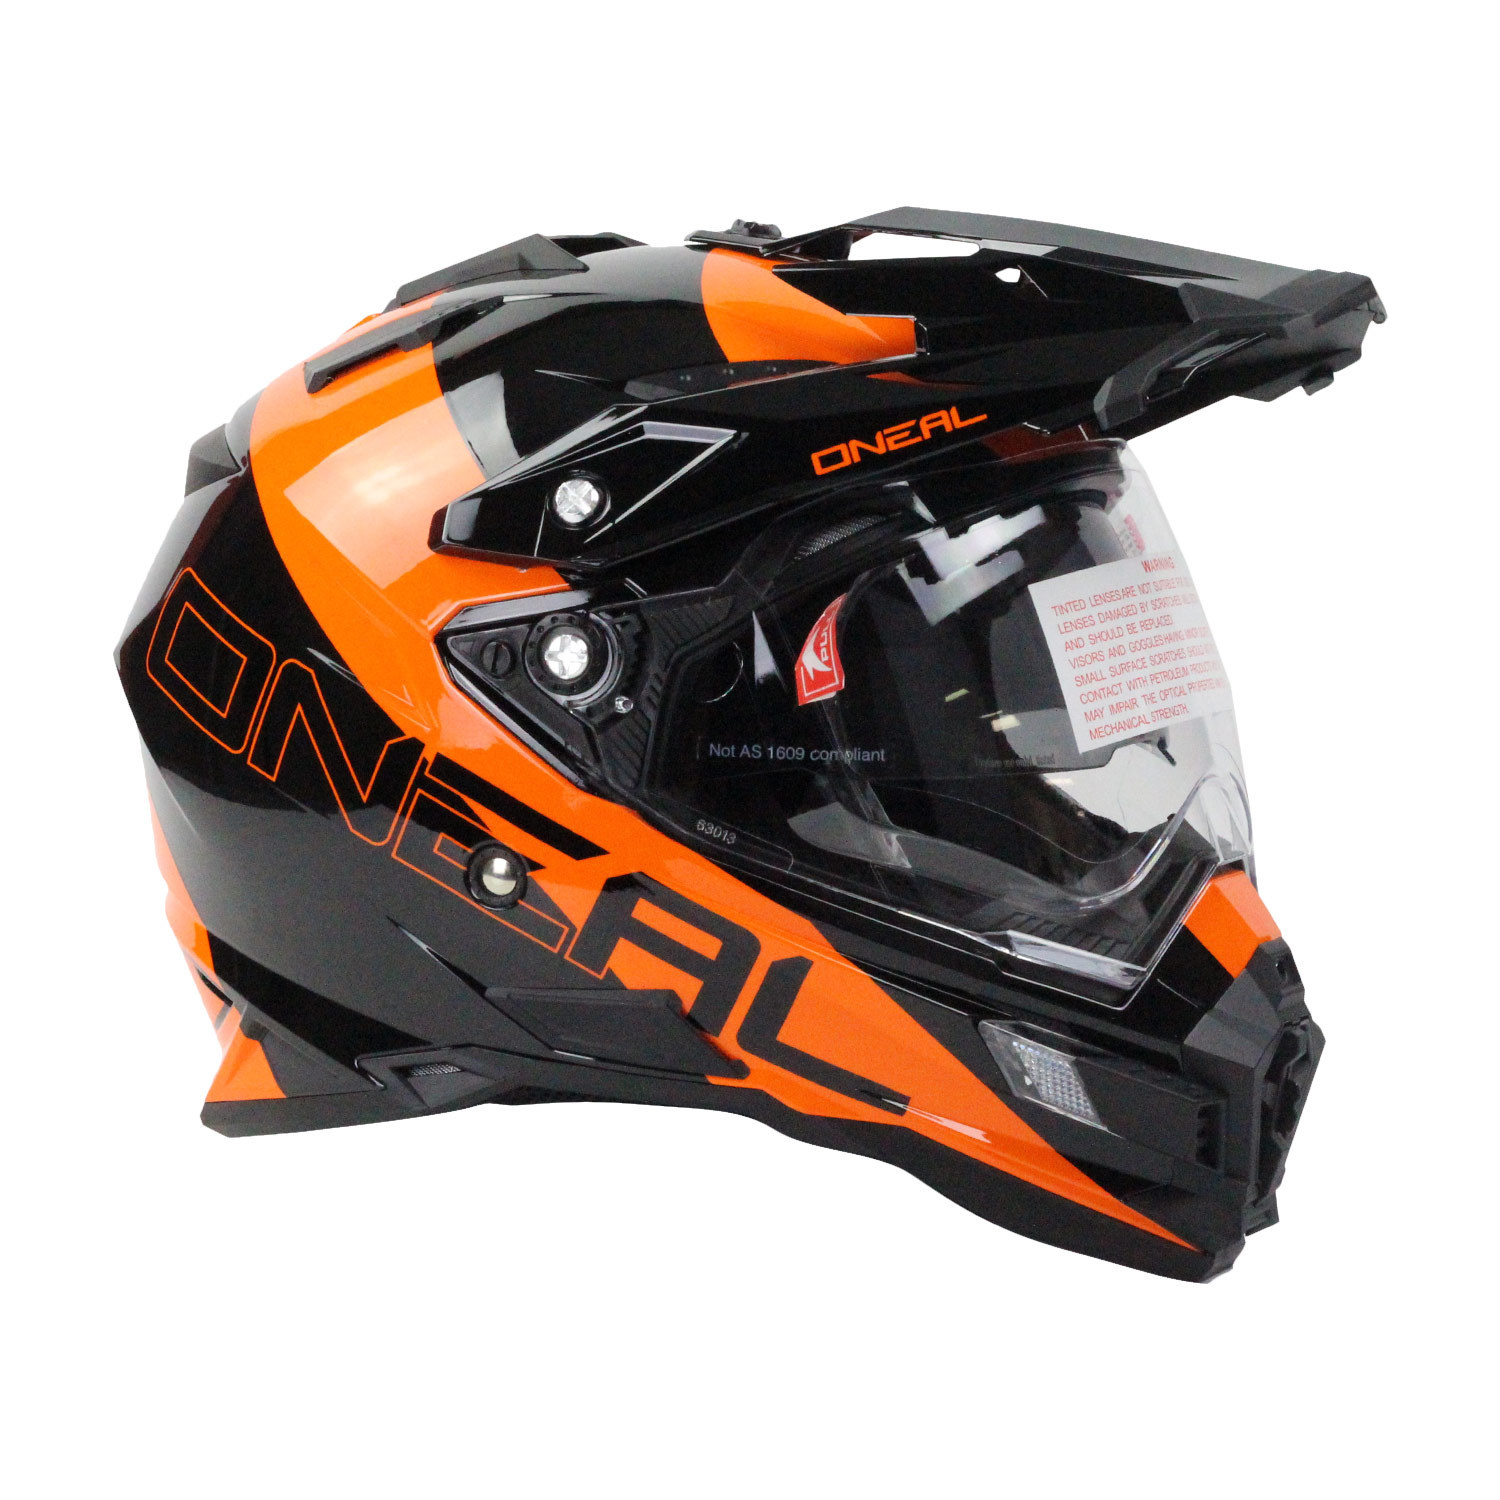 Oneal 2018 Sierra Dual Sport Edge Black Orange Motocross ...
